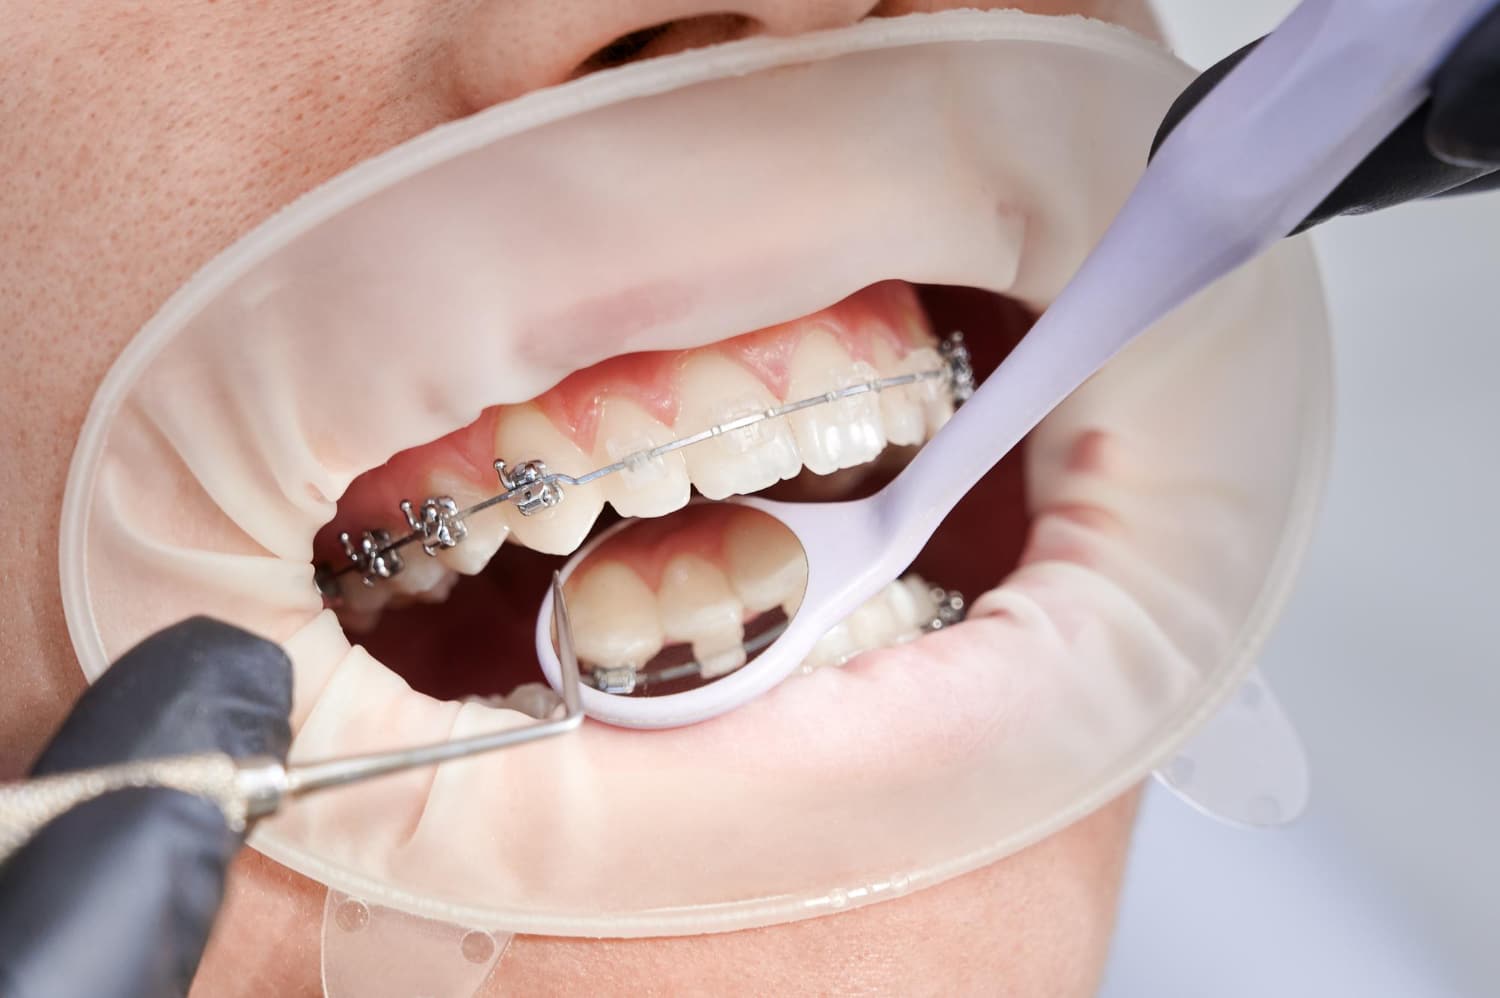 average cost of braces